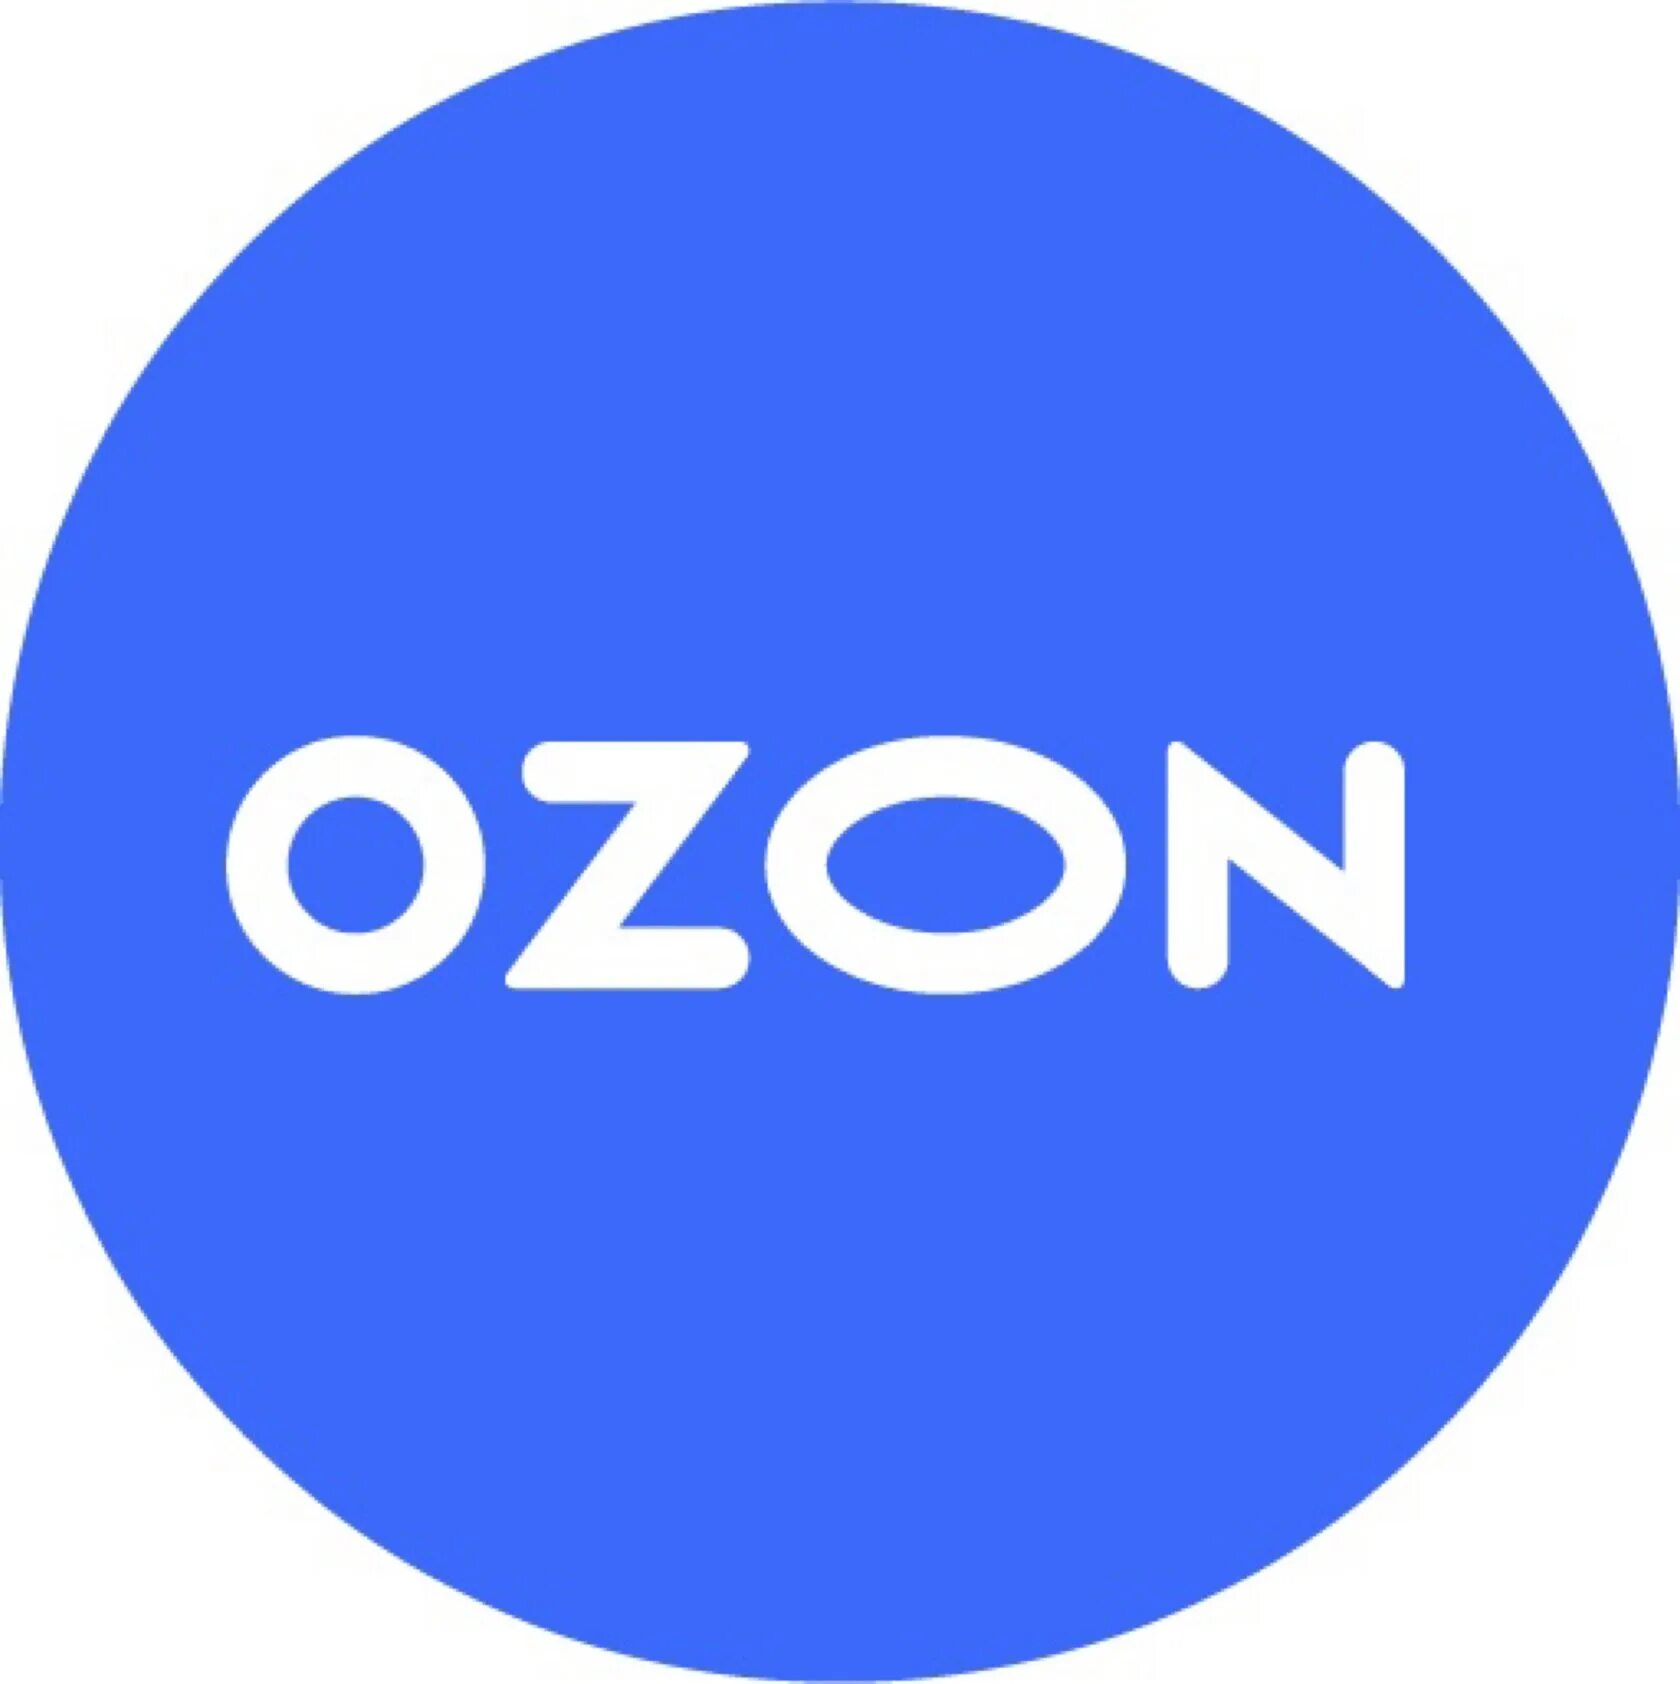 Озон тн. Озон. OZON логотип. Озен. Логотип Озон круглый.